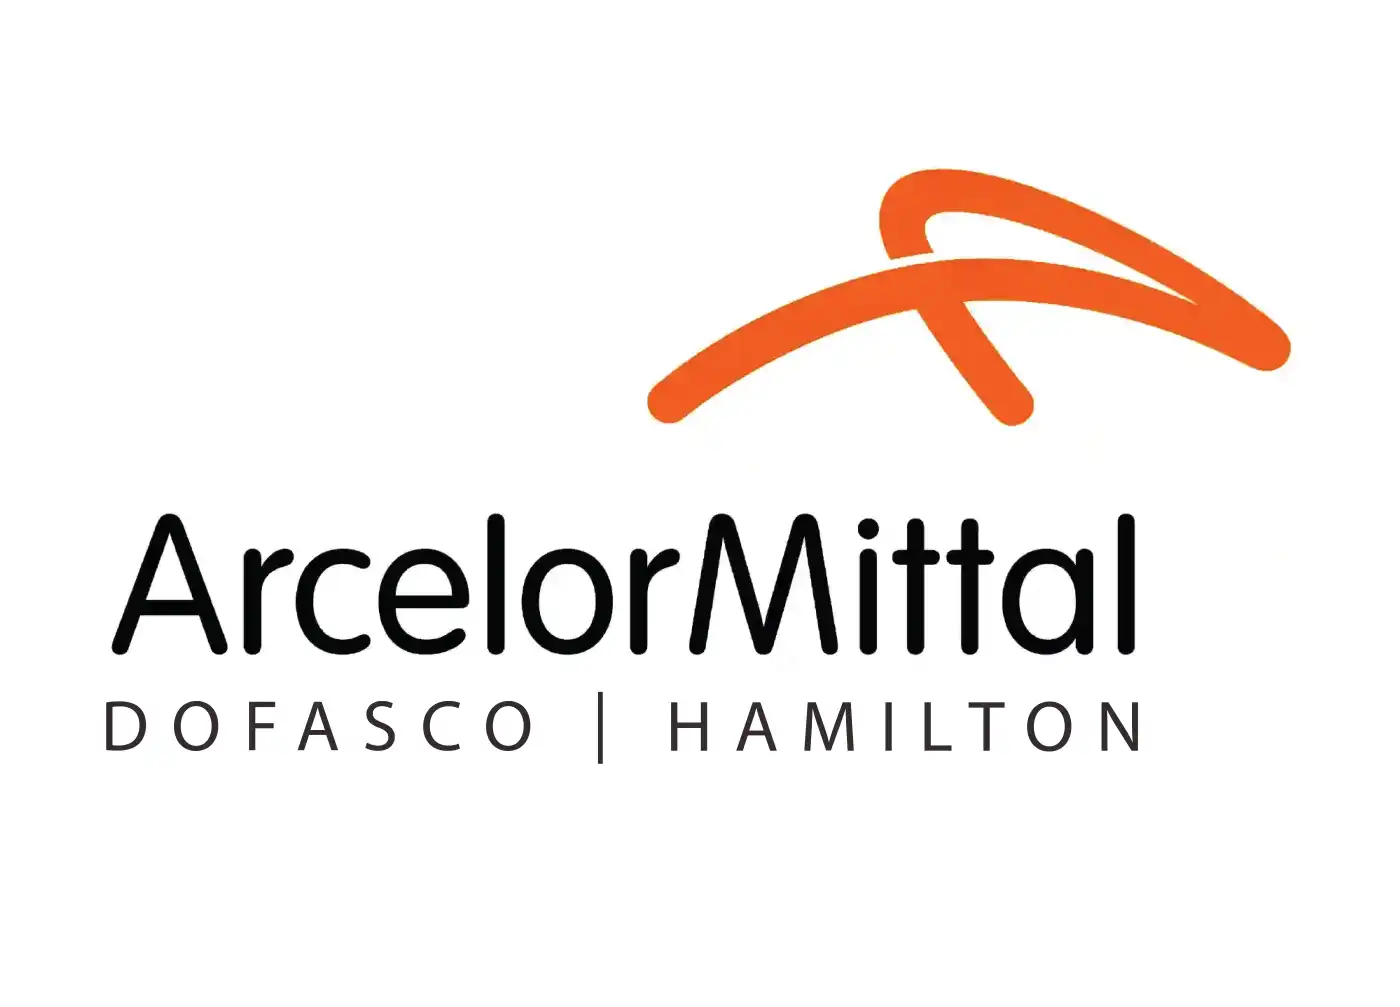 Arcelor Mittal Dofasco Hamilton, FADI-AMT Clients